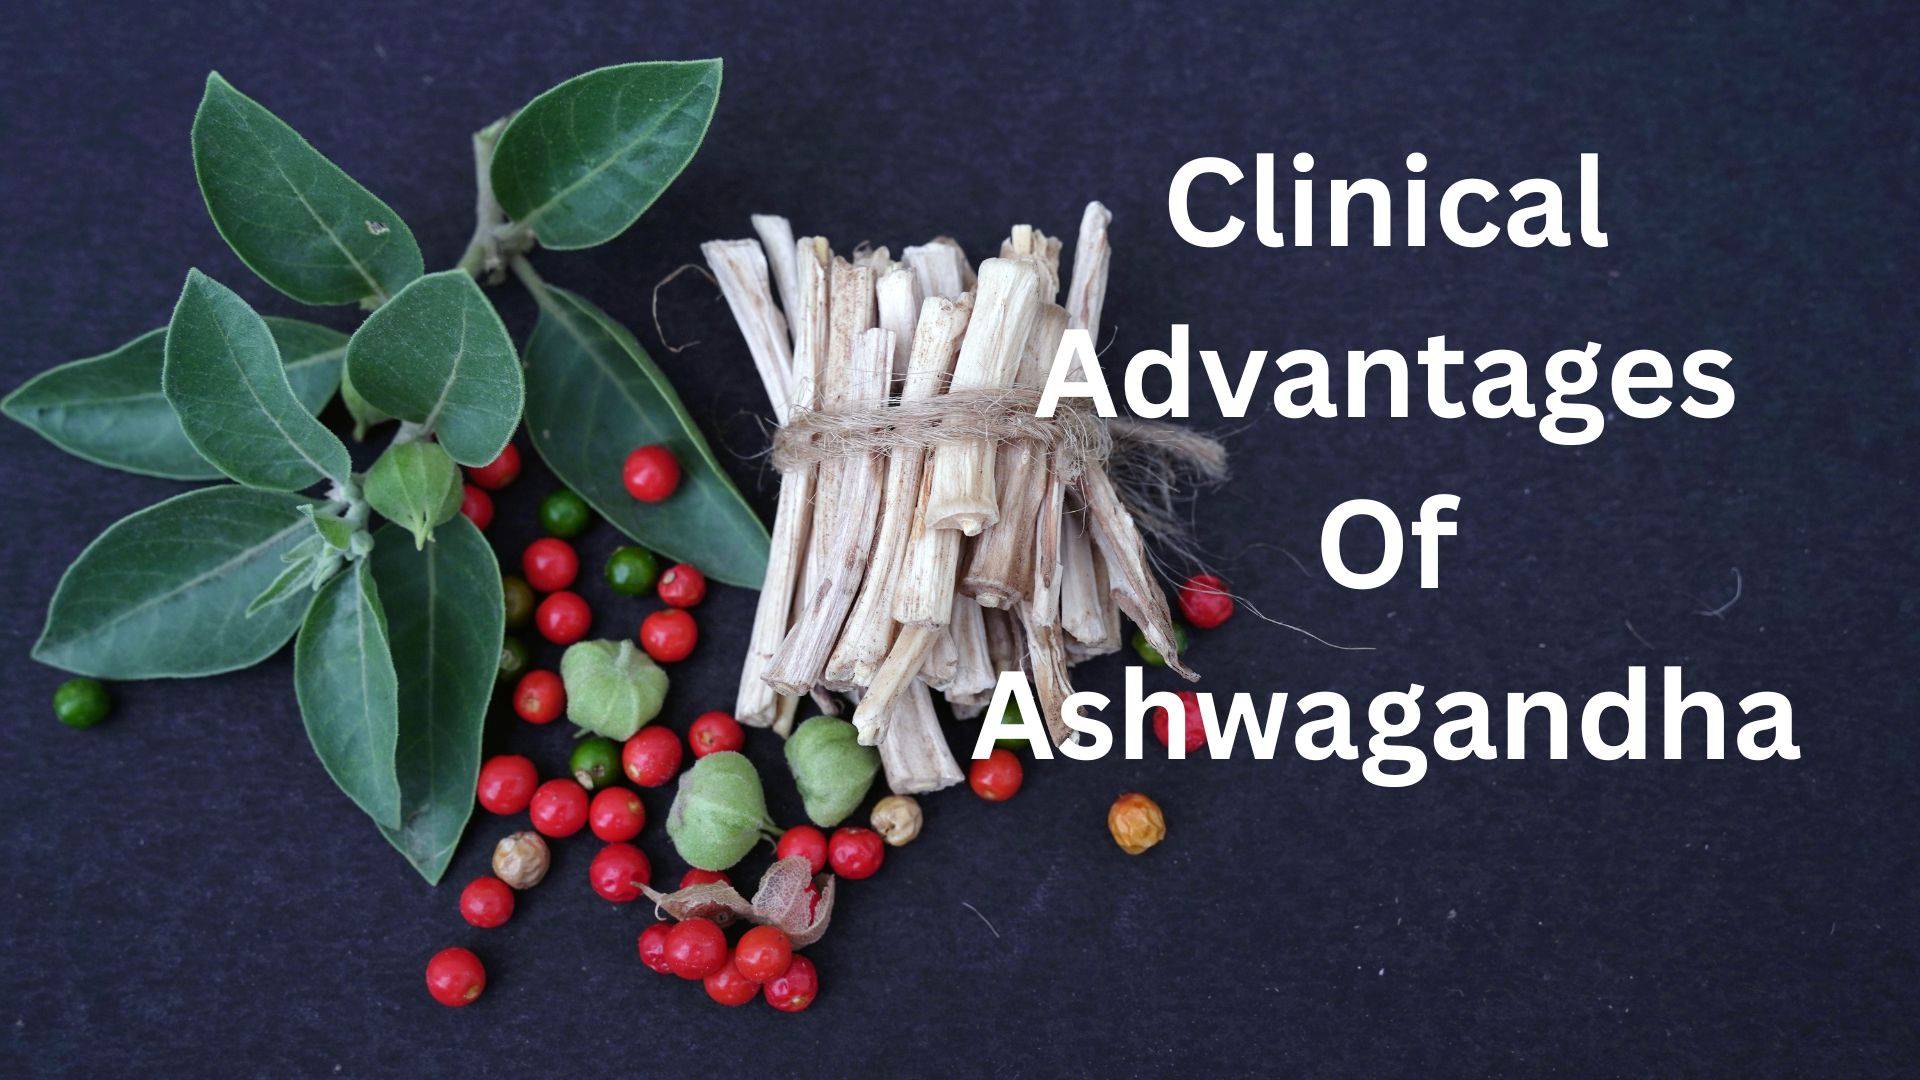 The Clinical Advantages of Ashwagandha